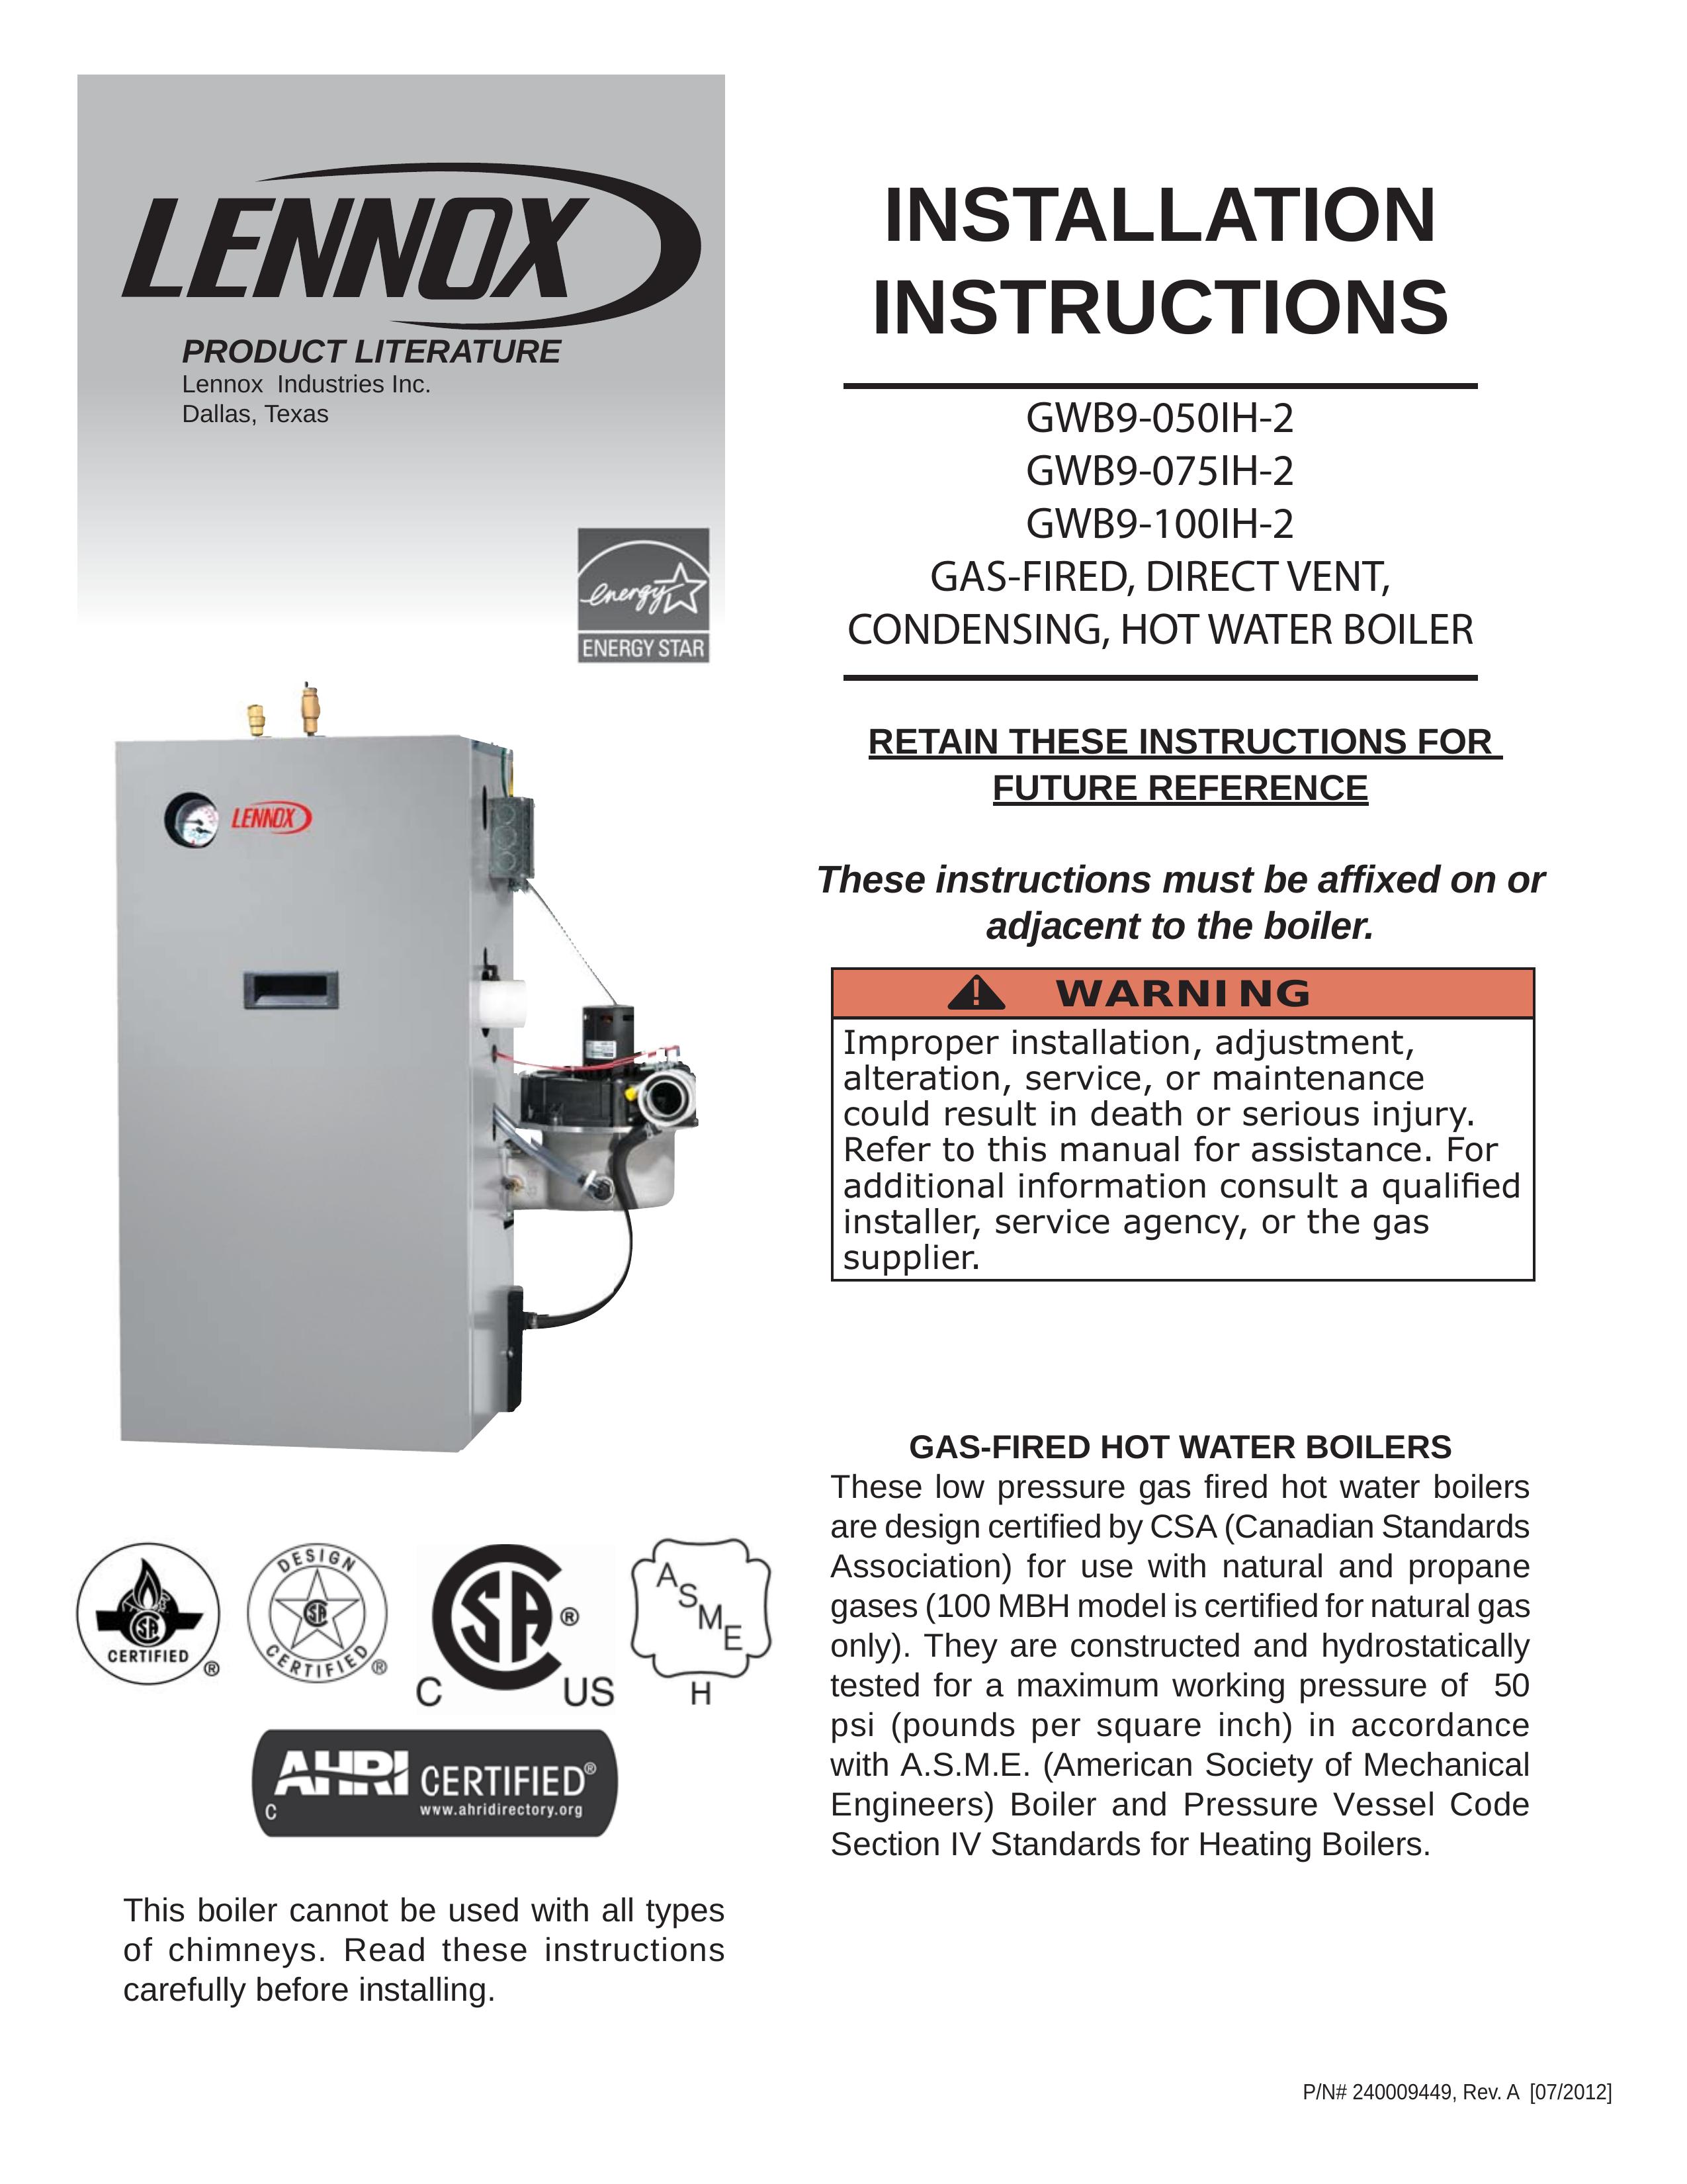 Lennox International Inc. GWB9-075IH-2 Water Dispenser User Manual